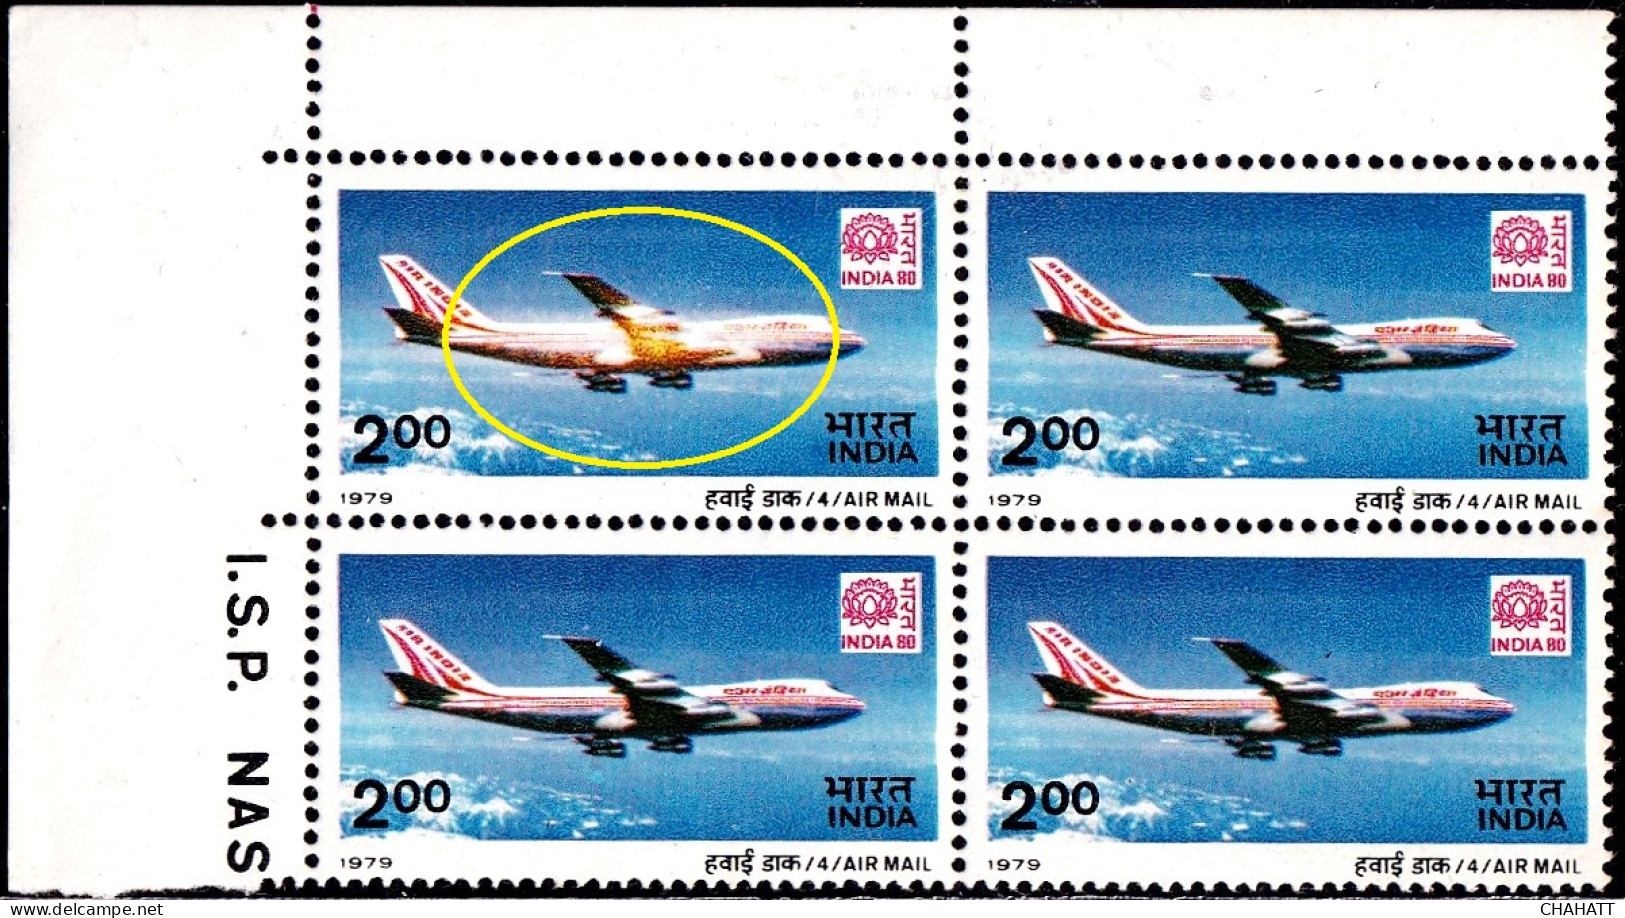 INDIA-1979- AIRMAIL-AIR INDIA FLIGHT-200p- ERROR-COLOR VARIETY - CORNER BLOCK OF 4- H2-25 - Abarten Und Kuriositäten